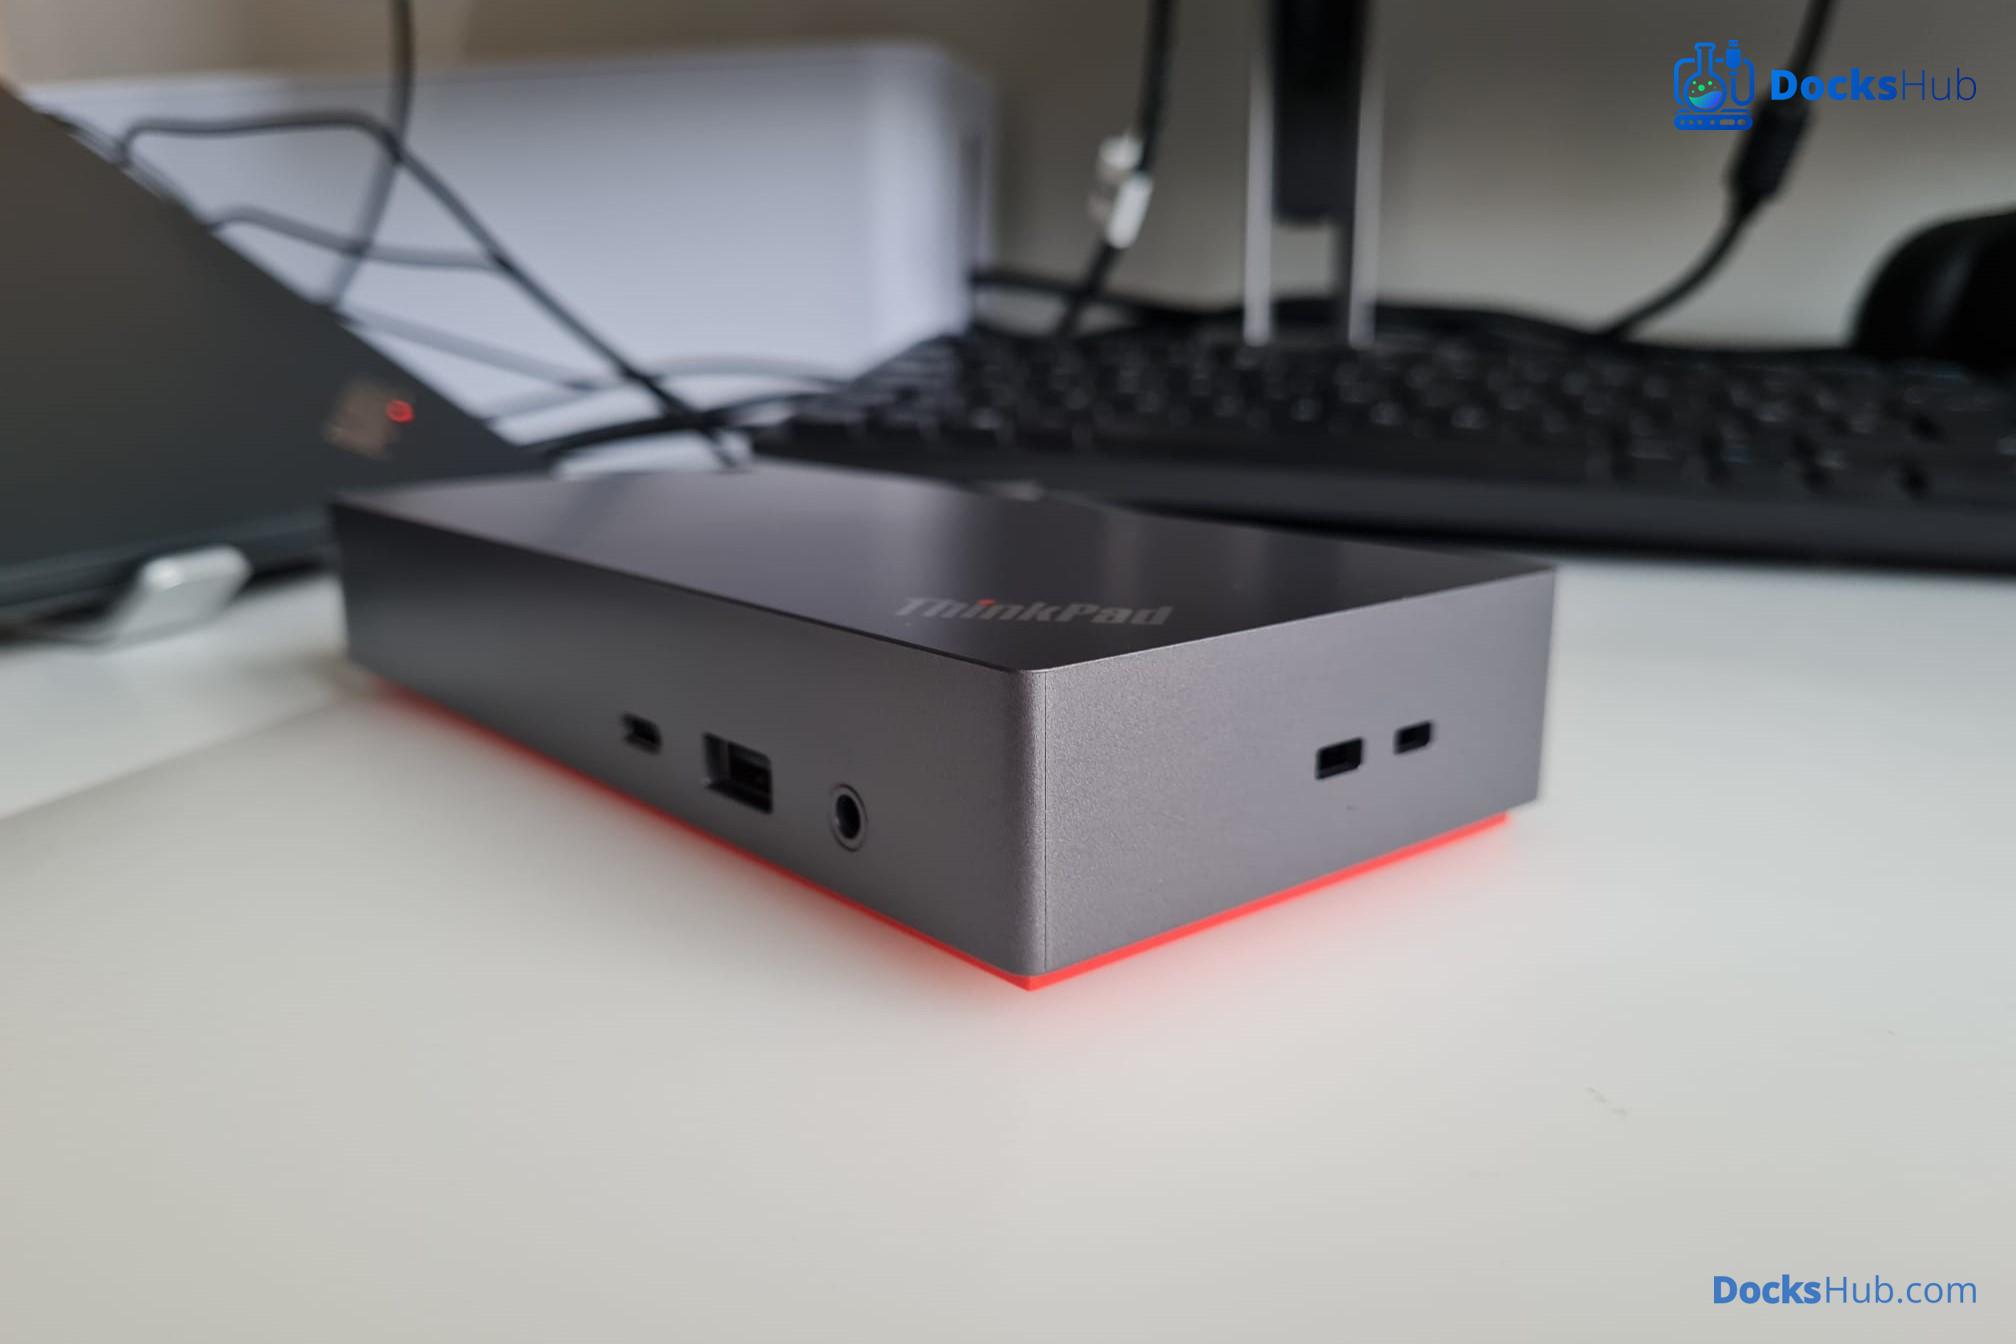 Station d'accueil ThinkPad Universal USB-C